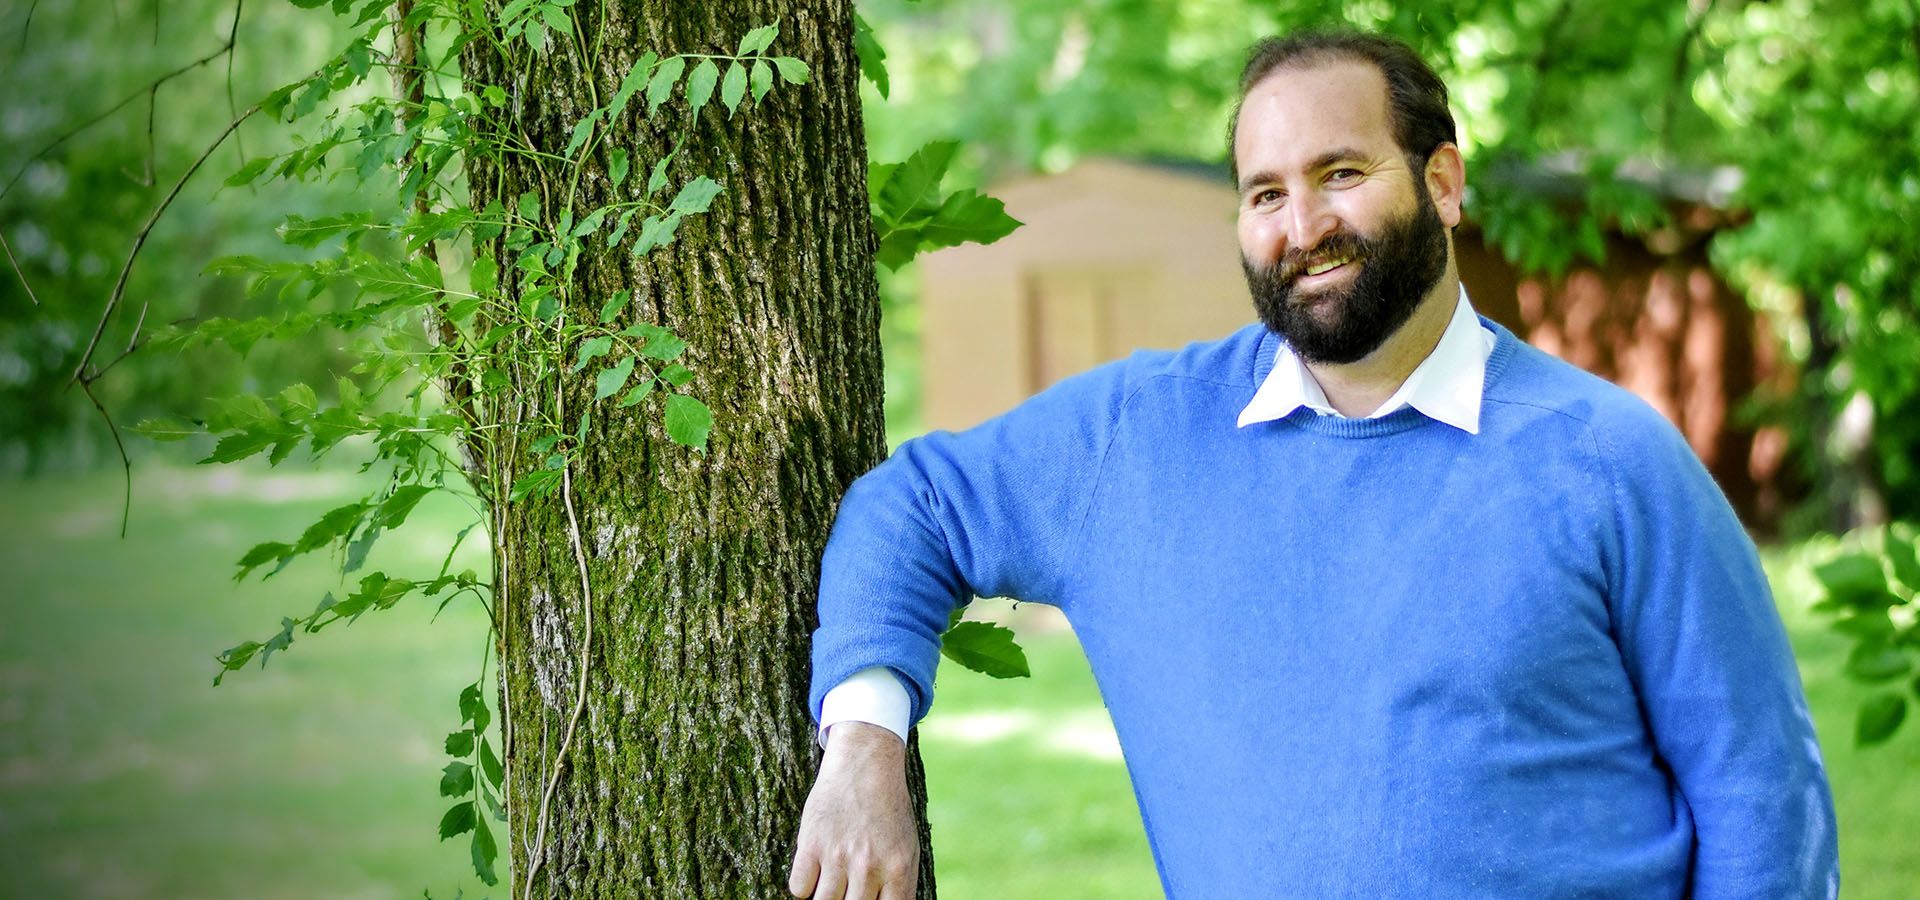 Dr. Dan Goldstein leaning on tree